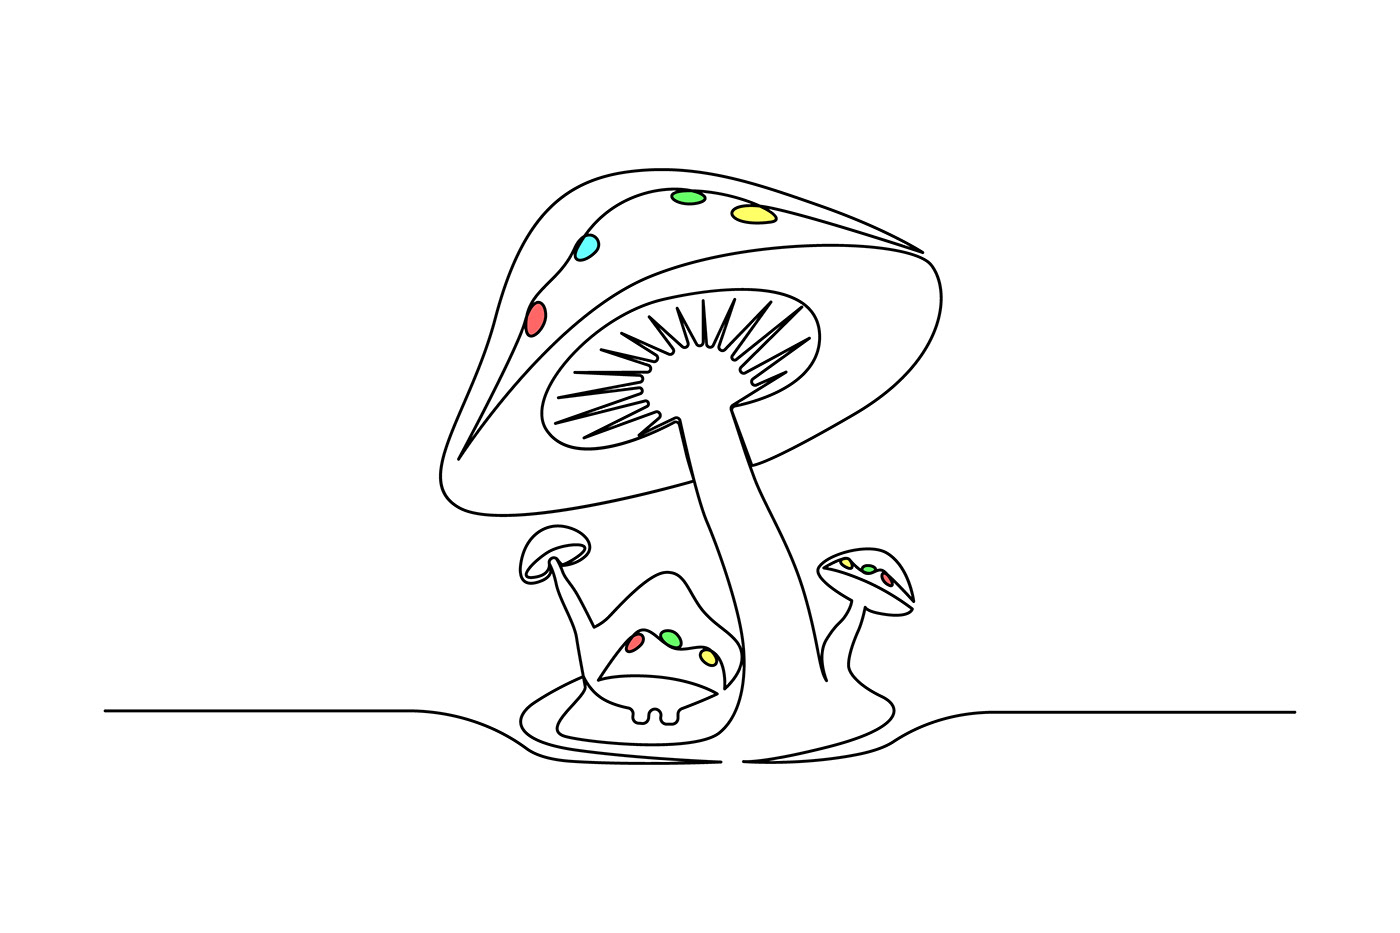 Digital Art  mushrooms illustration line art illustration line art Mushroom drawing drawing art illustration art continuous mushroom mushroom illustration mushroom single line